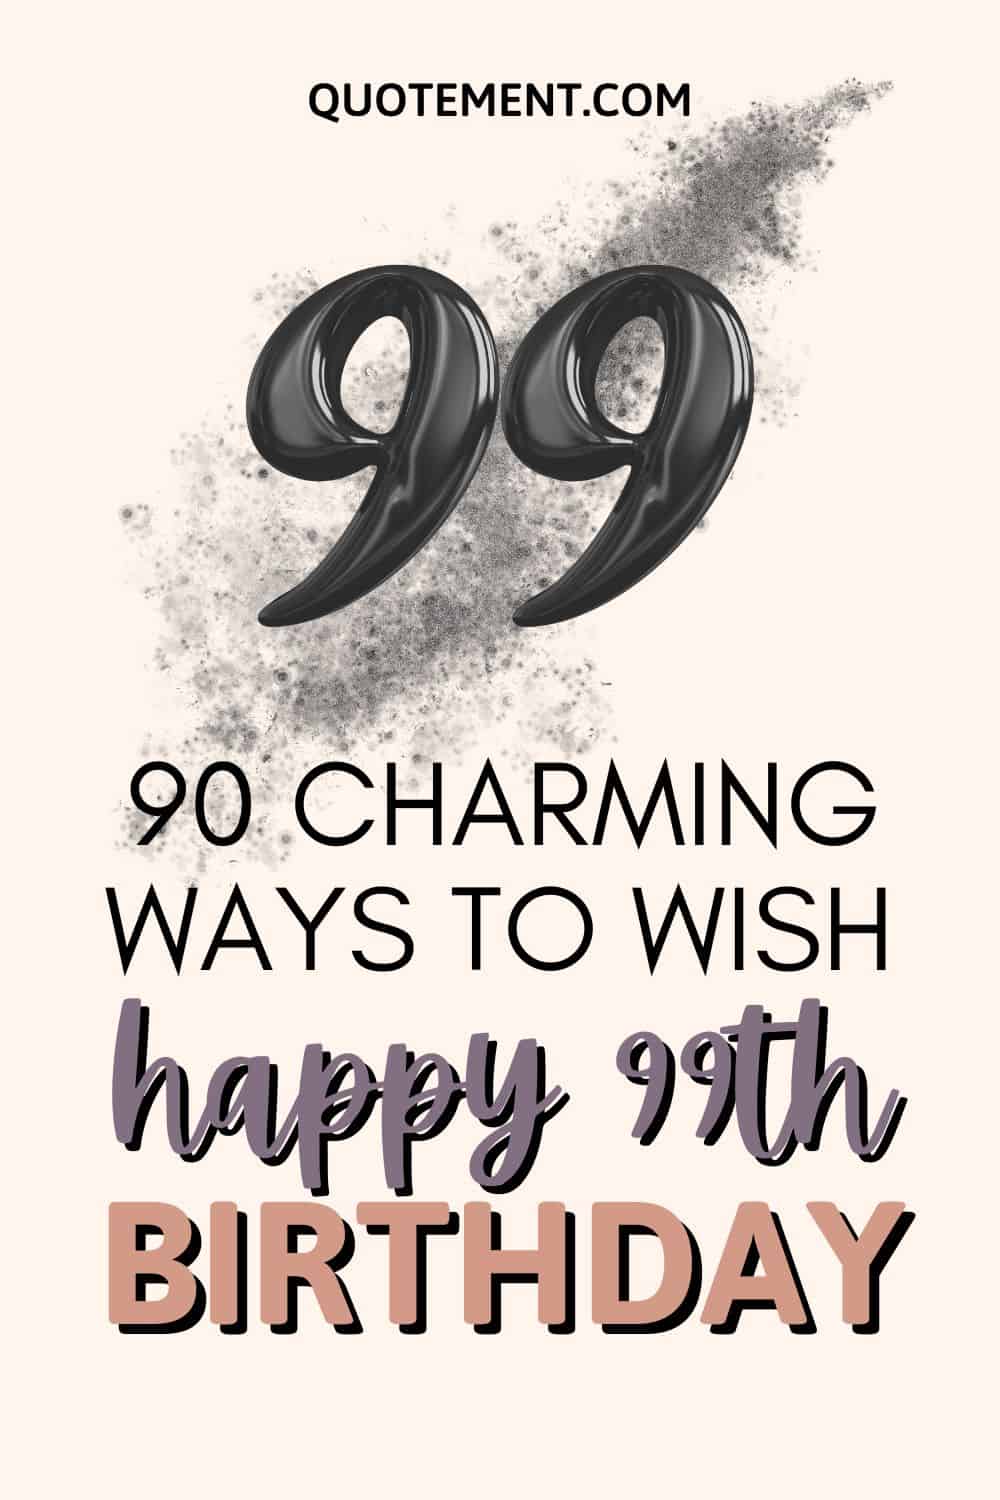 90 Charming Ways To Wish A Happy 99th Birthday 
